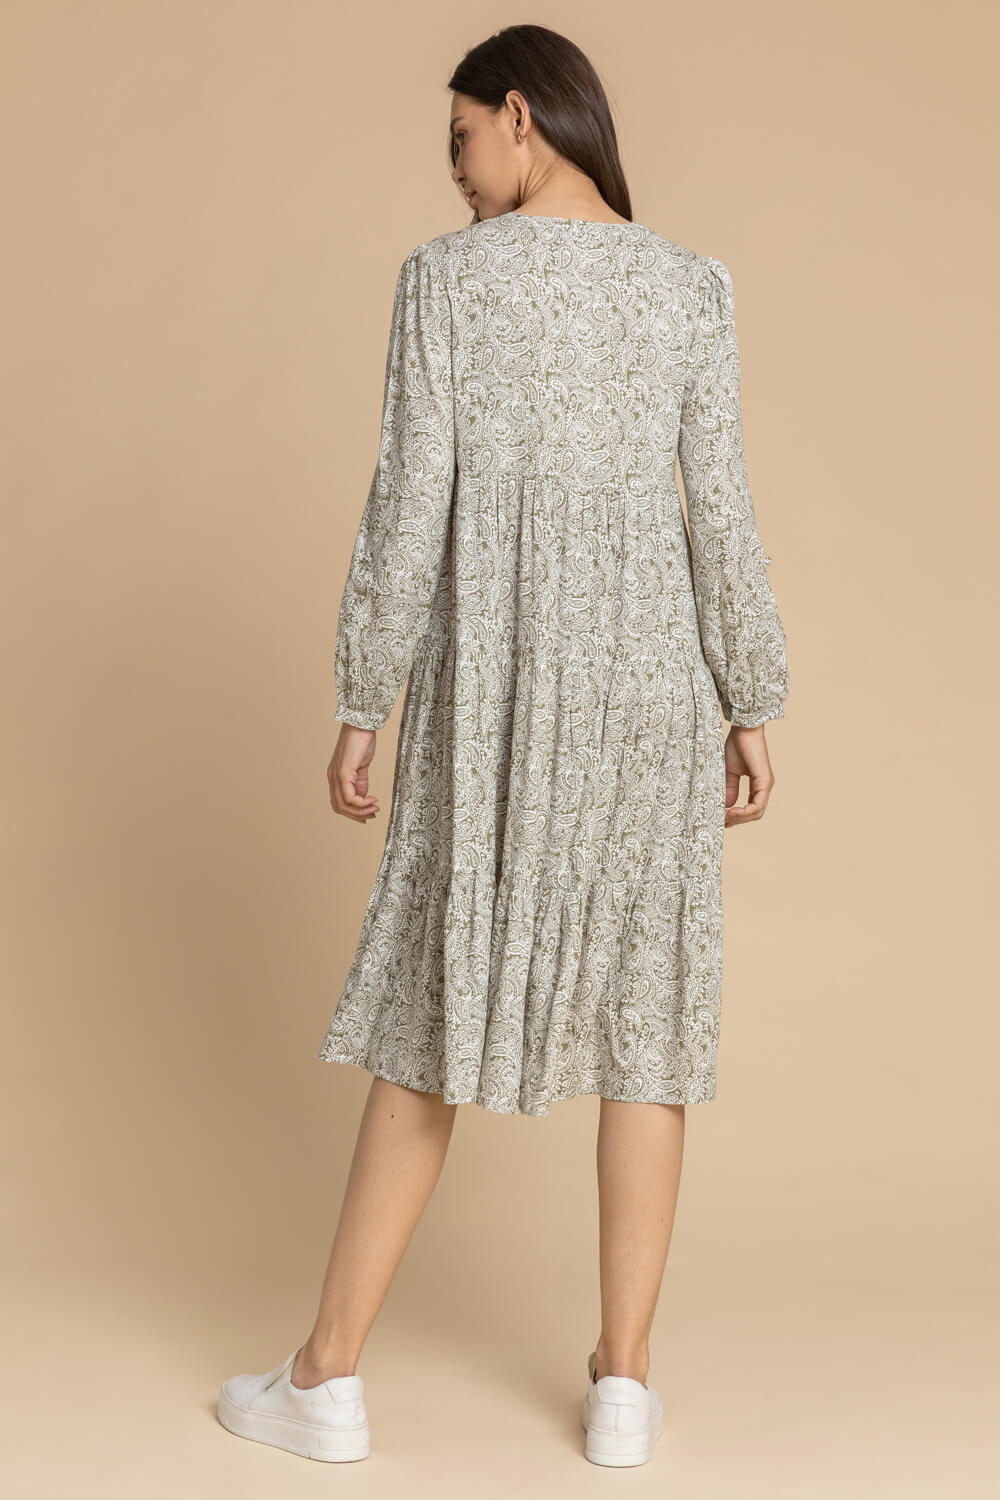 KHAKI Paisley Print Tiered Midi Dress, Image 2 of 5